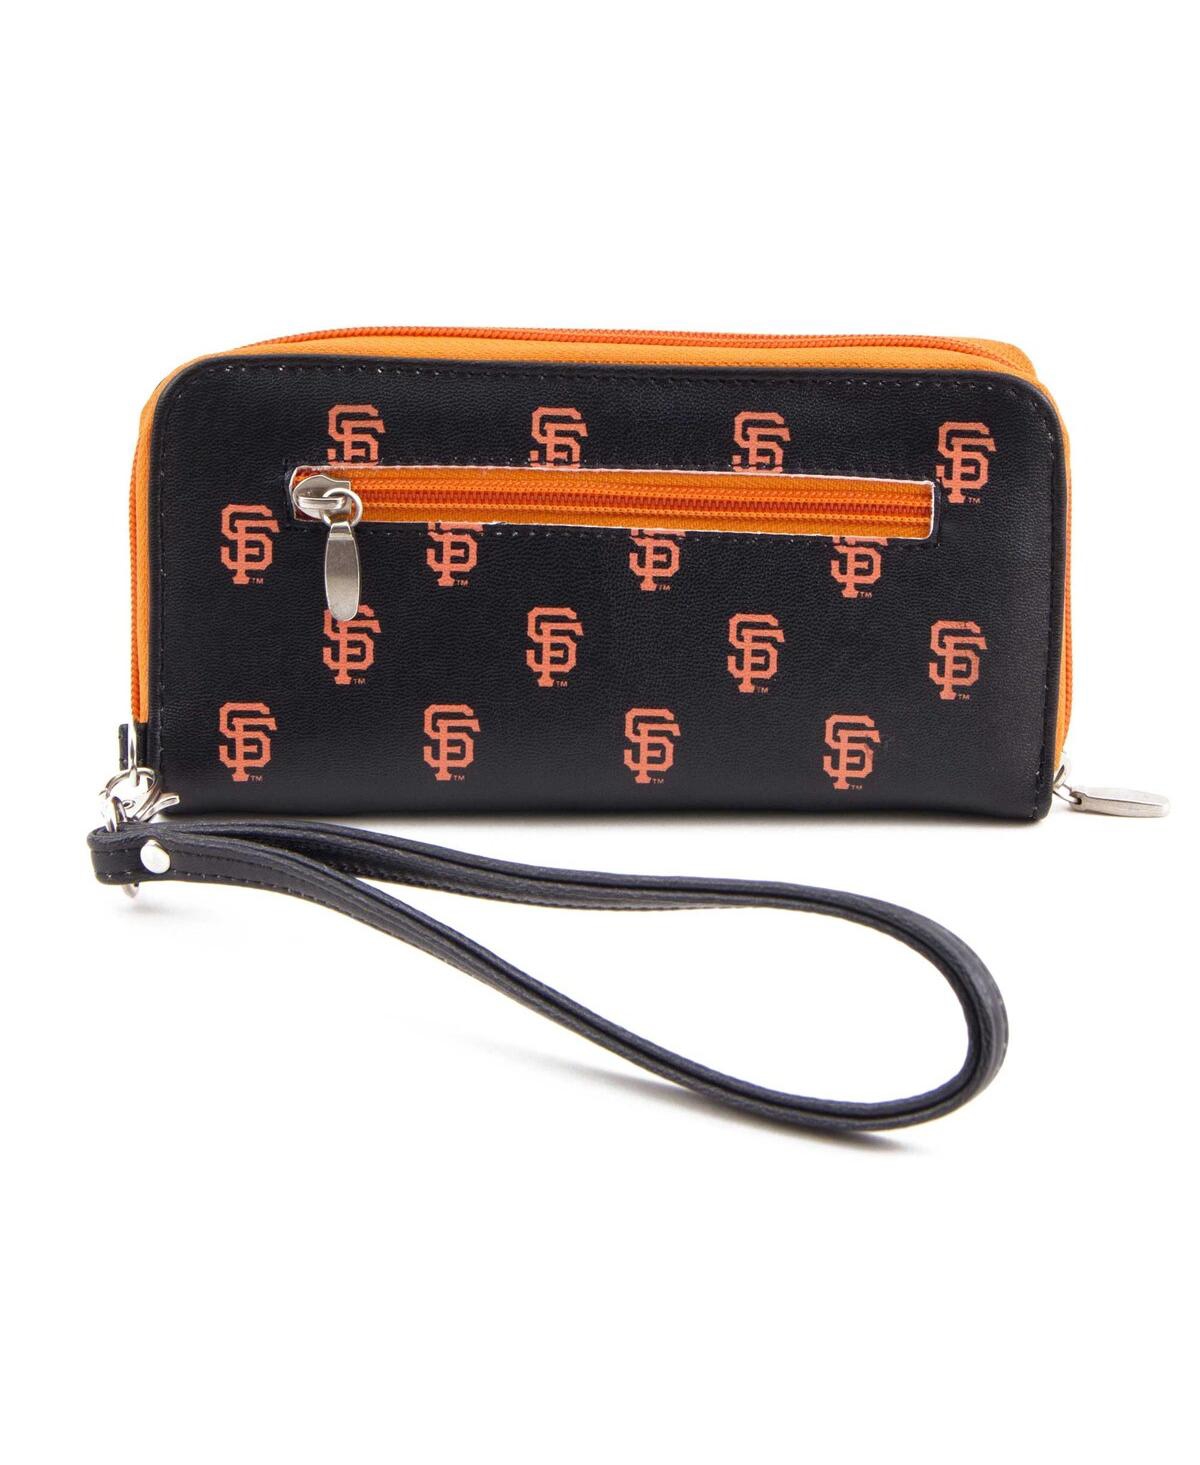 Women's San Francisco Giants Zip-Around Wristlet Wallet - Black